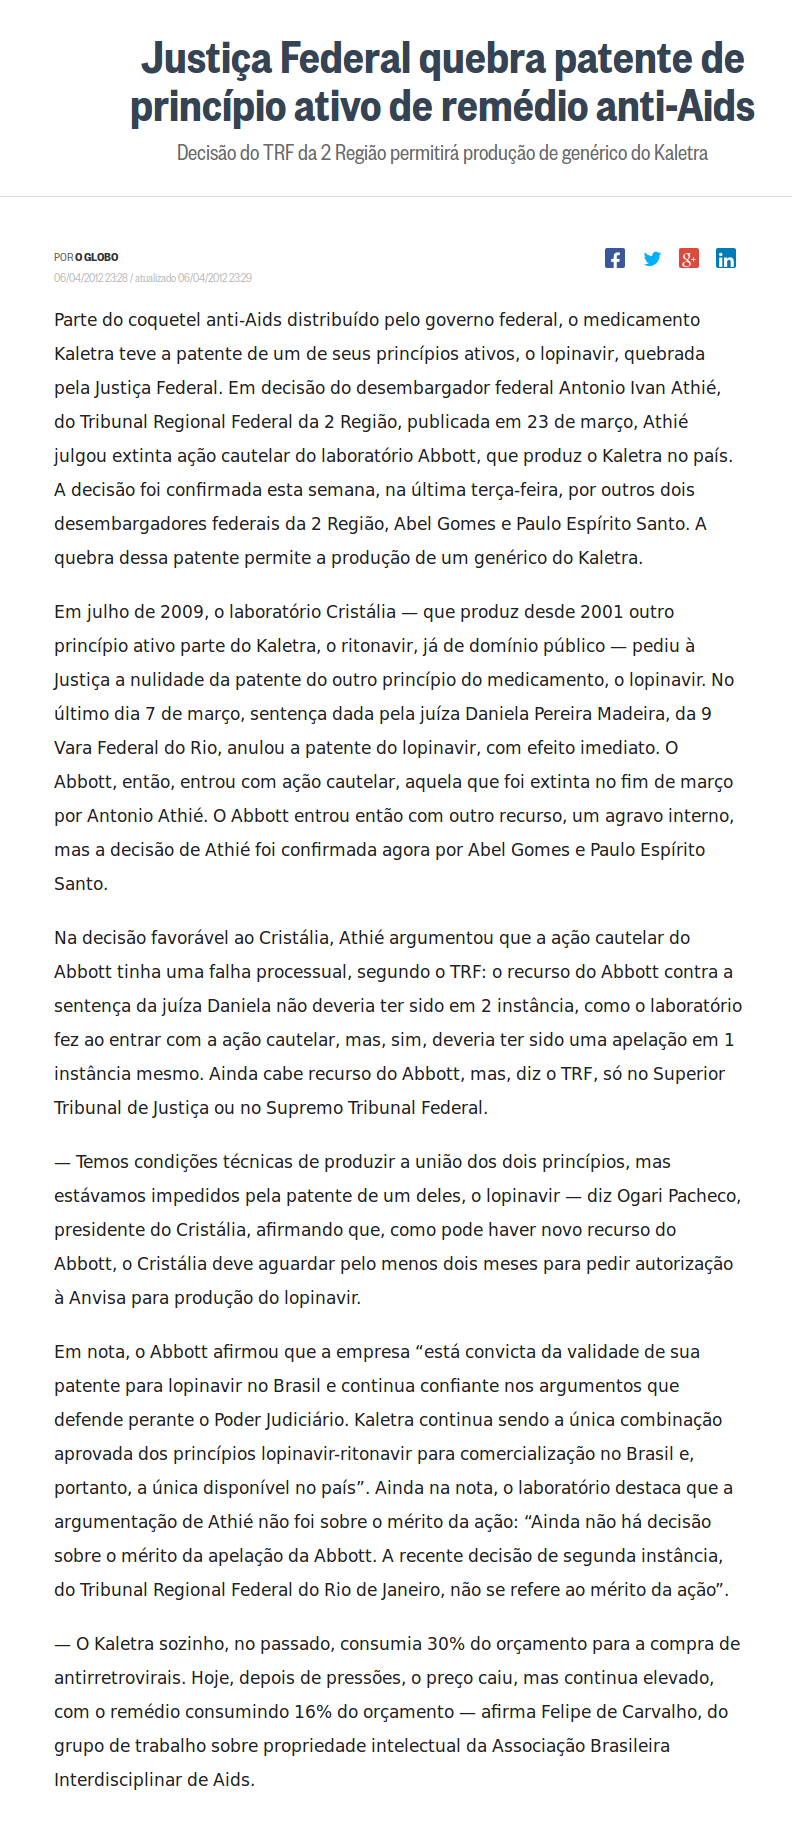 Globo_justica_federal_quebra_patente_principio_ativo_remedio_antiAids_2012